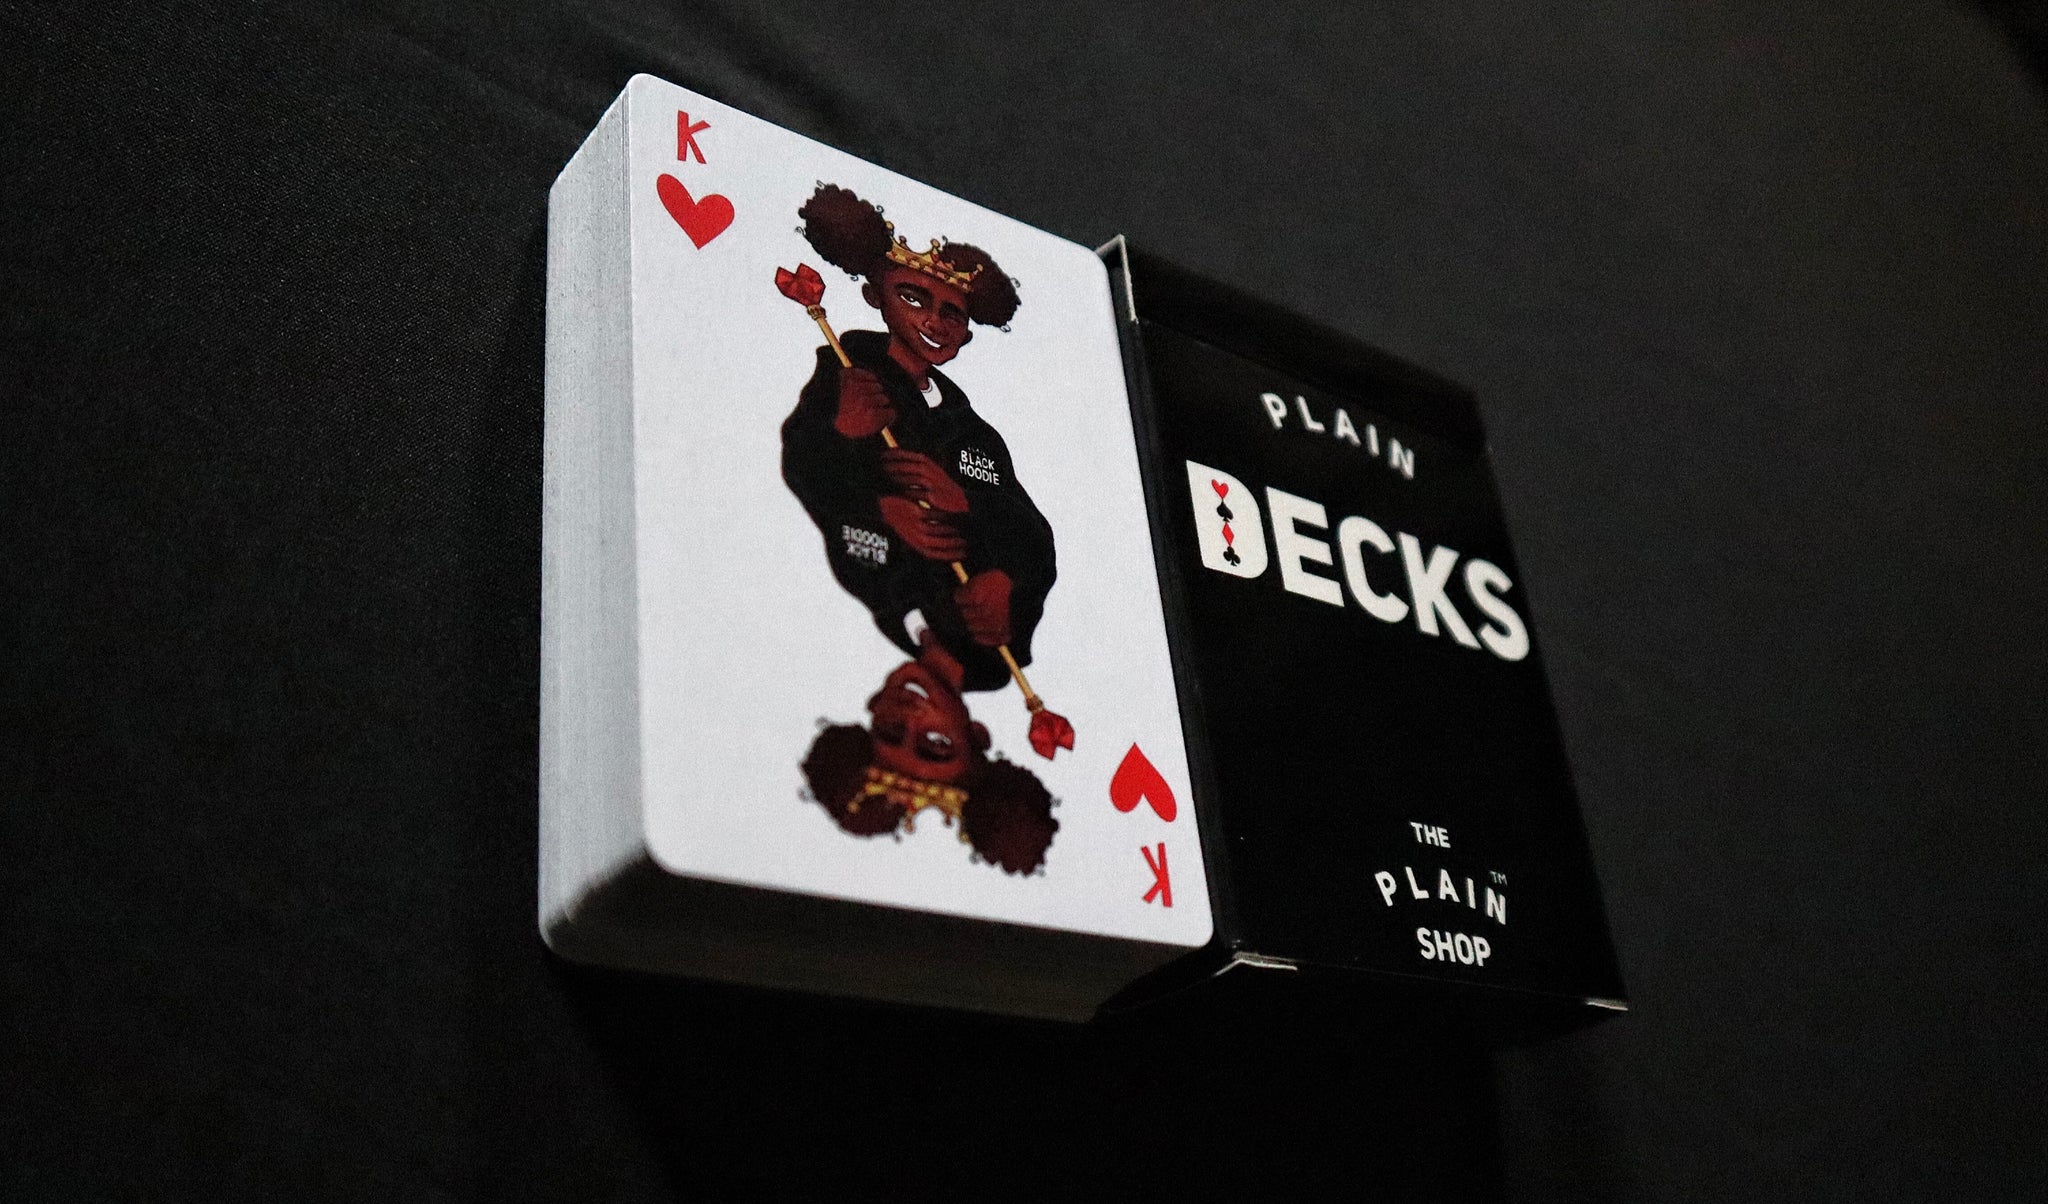 Plain Black Cards - We put the black in blackjack! – The Plain Shop